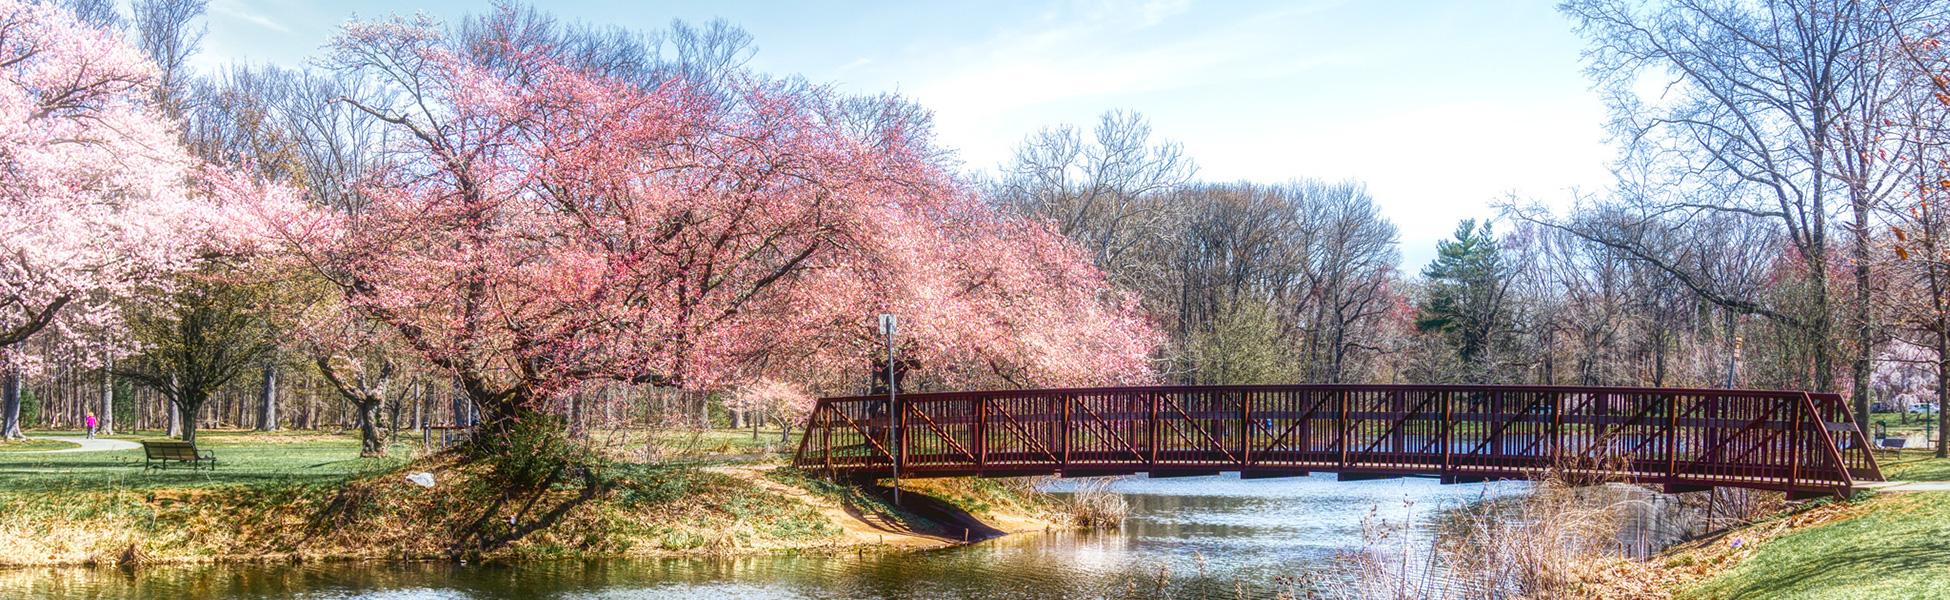 Bridge with cherry trees in bloom